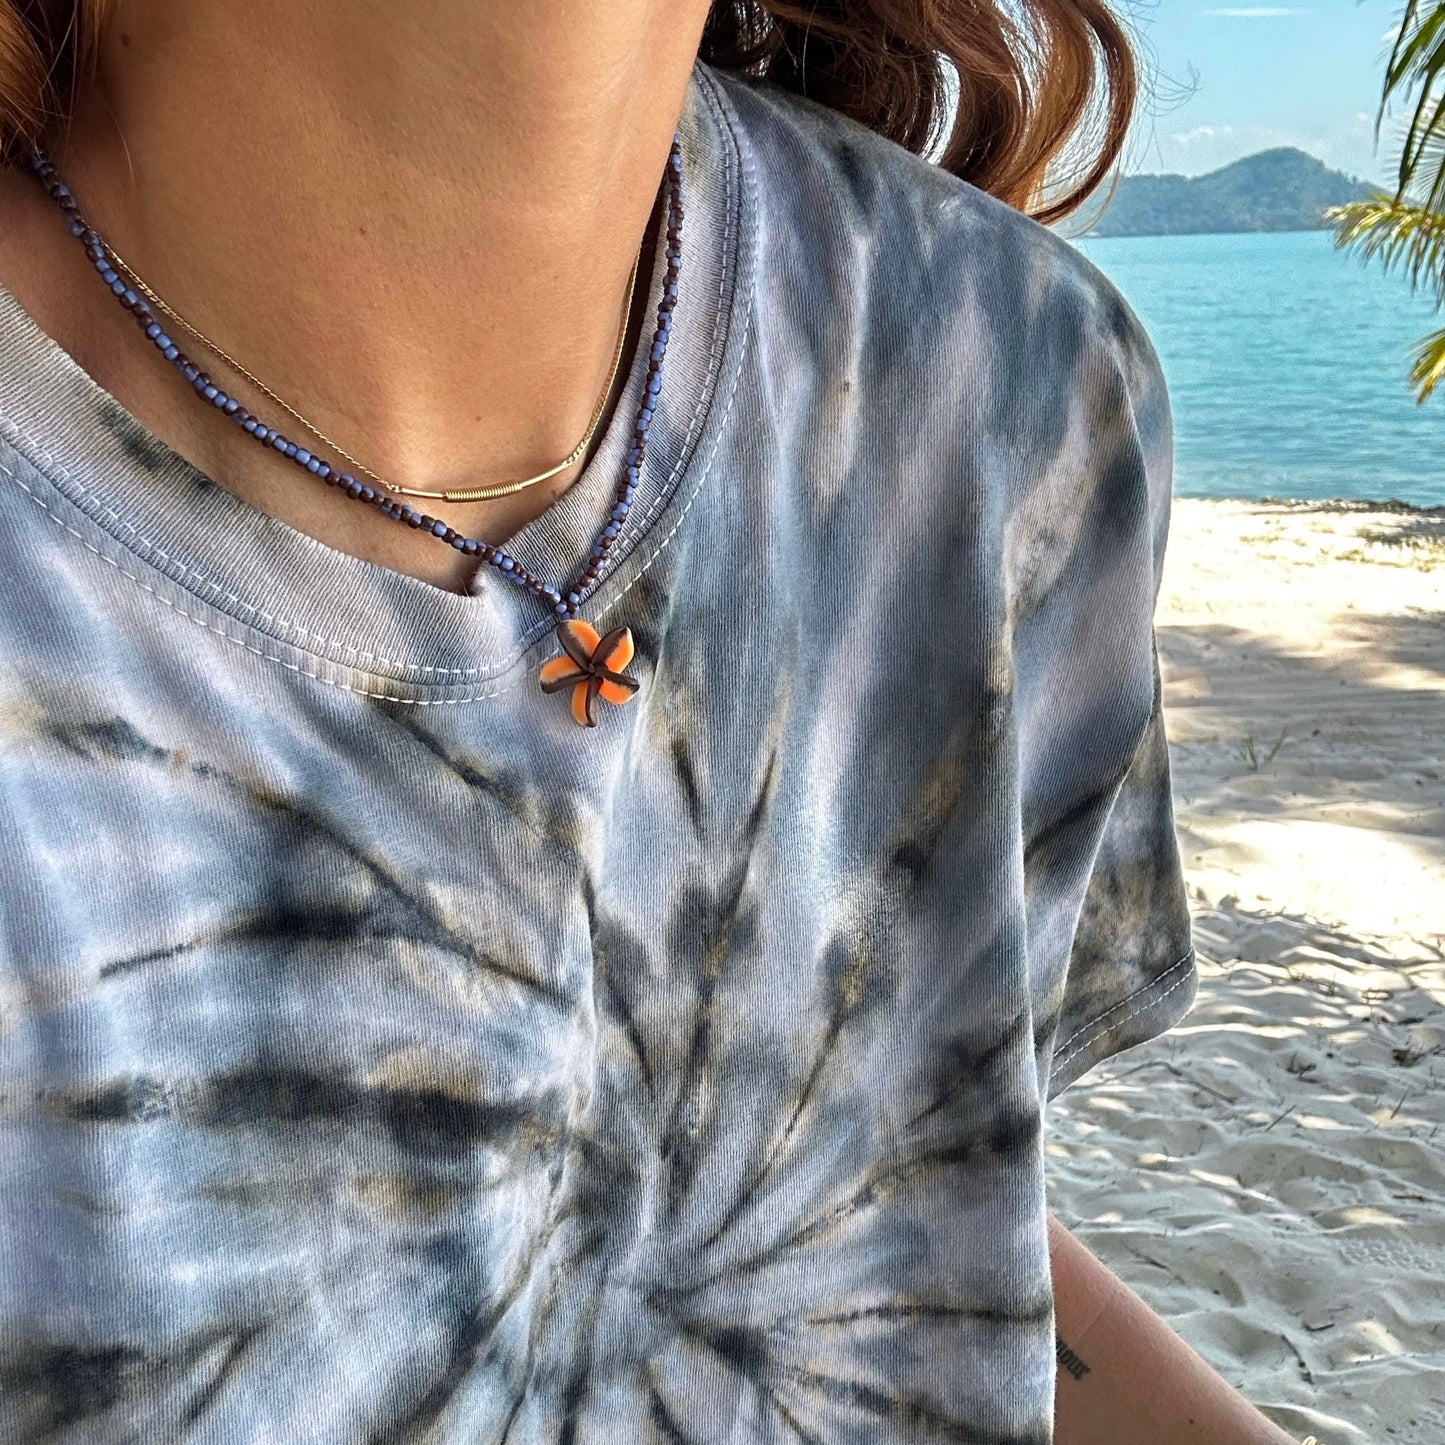 Fiji Flower Necklace